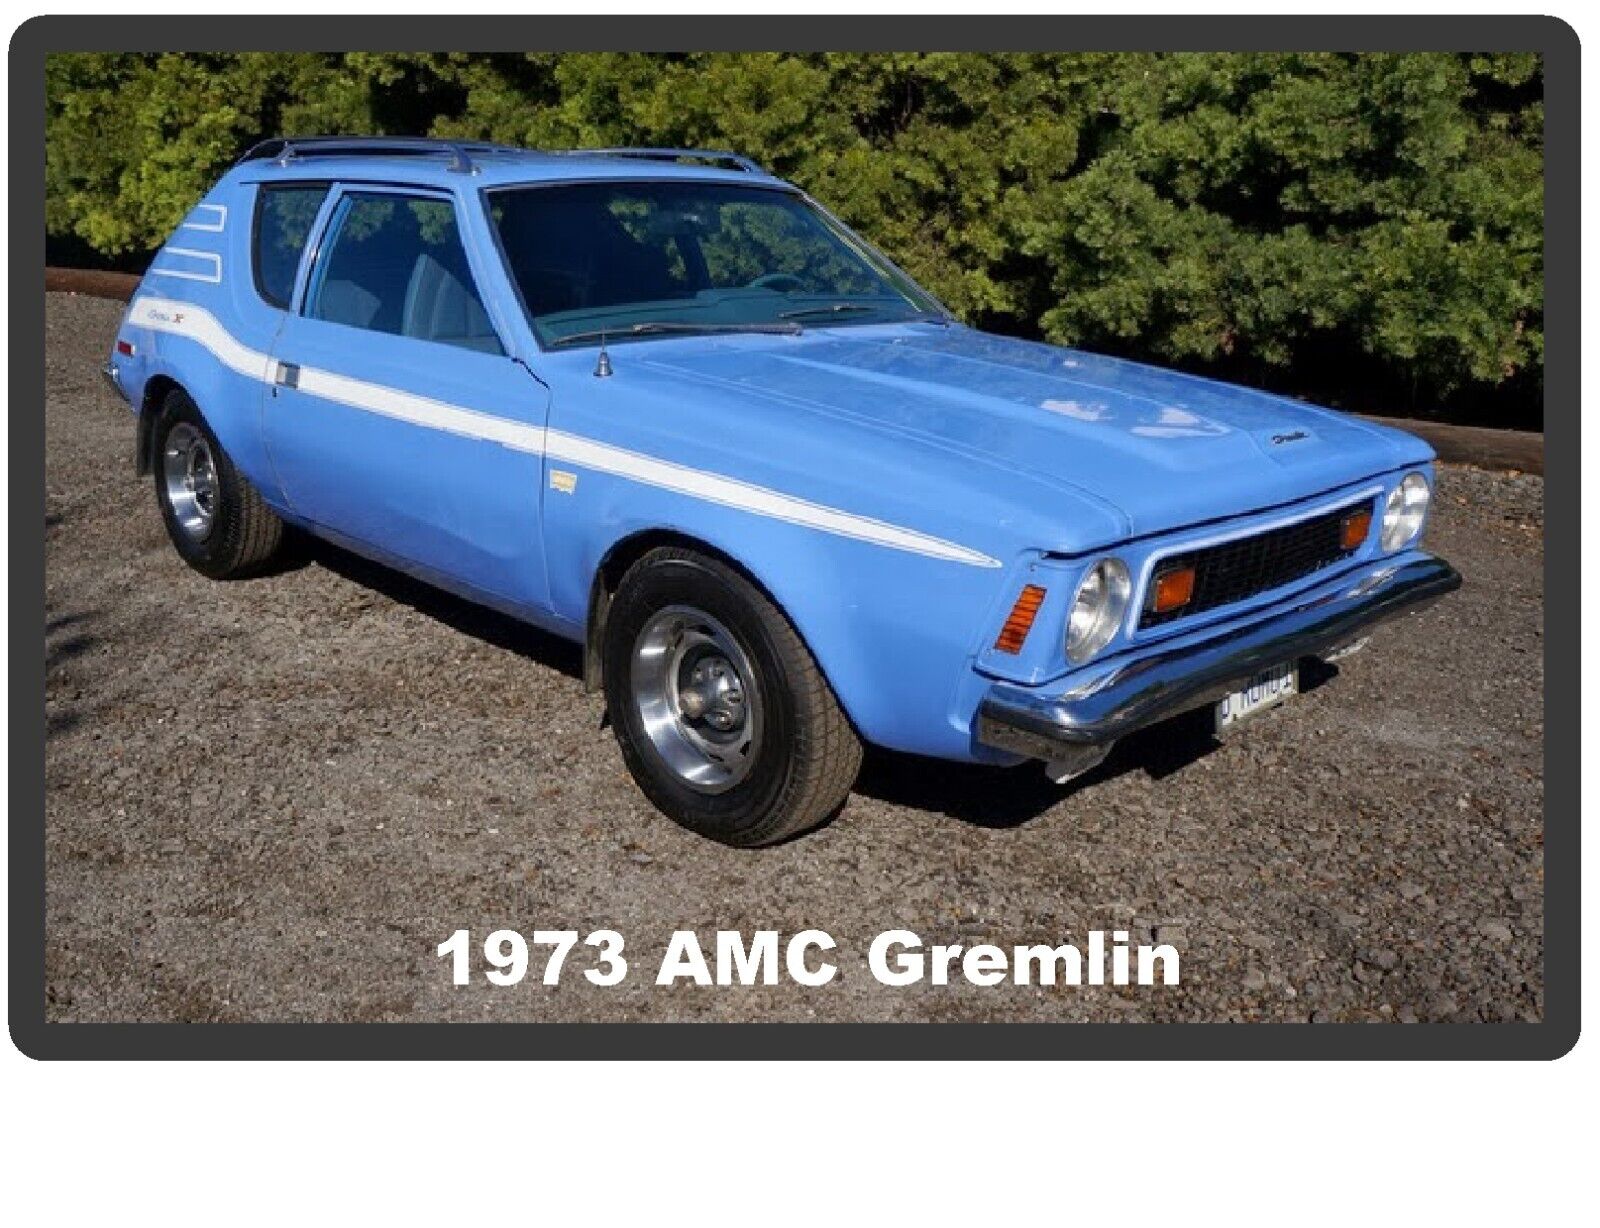 1973 AMC Gremlin Auto Refrigerator / Tool Box Magnet